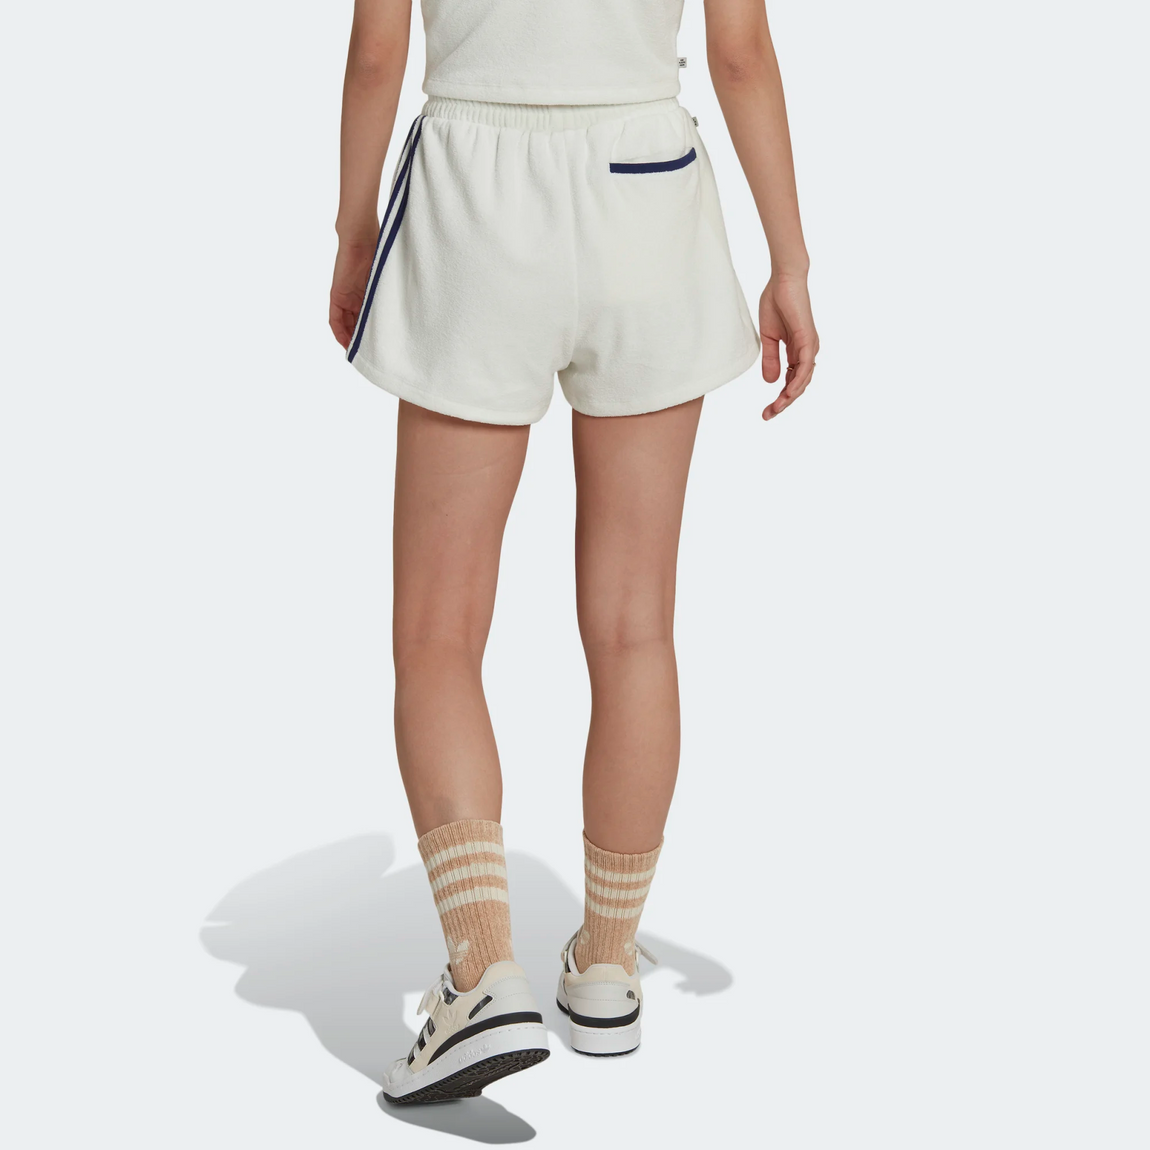 Adidas Women's High-Waist Towel Terry Shorts (Non Dyed) - Adidas Women's High-Waist Towel Terry Shorts (Non Dyed) - 